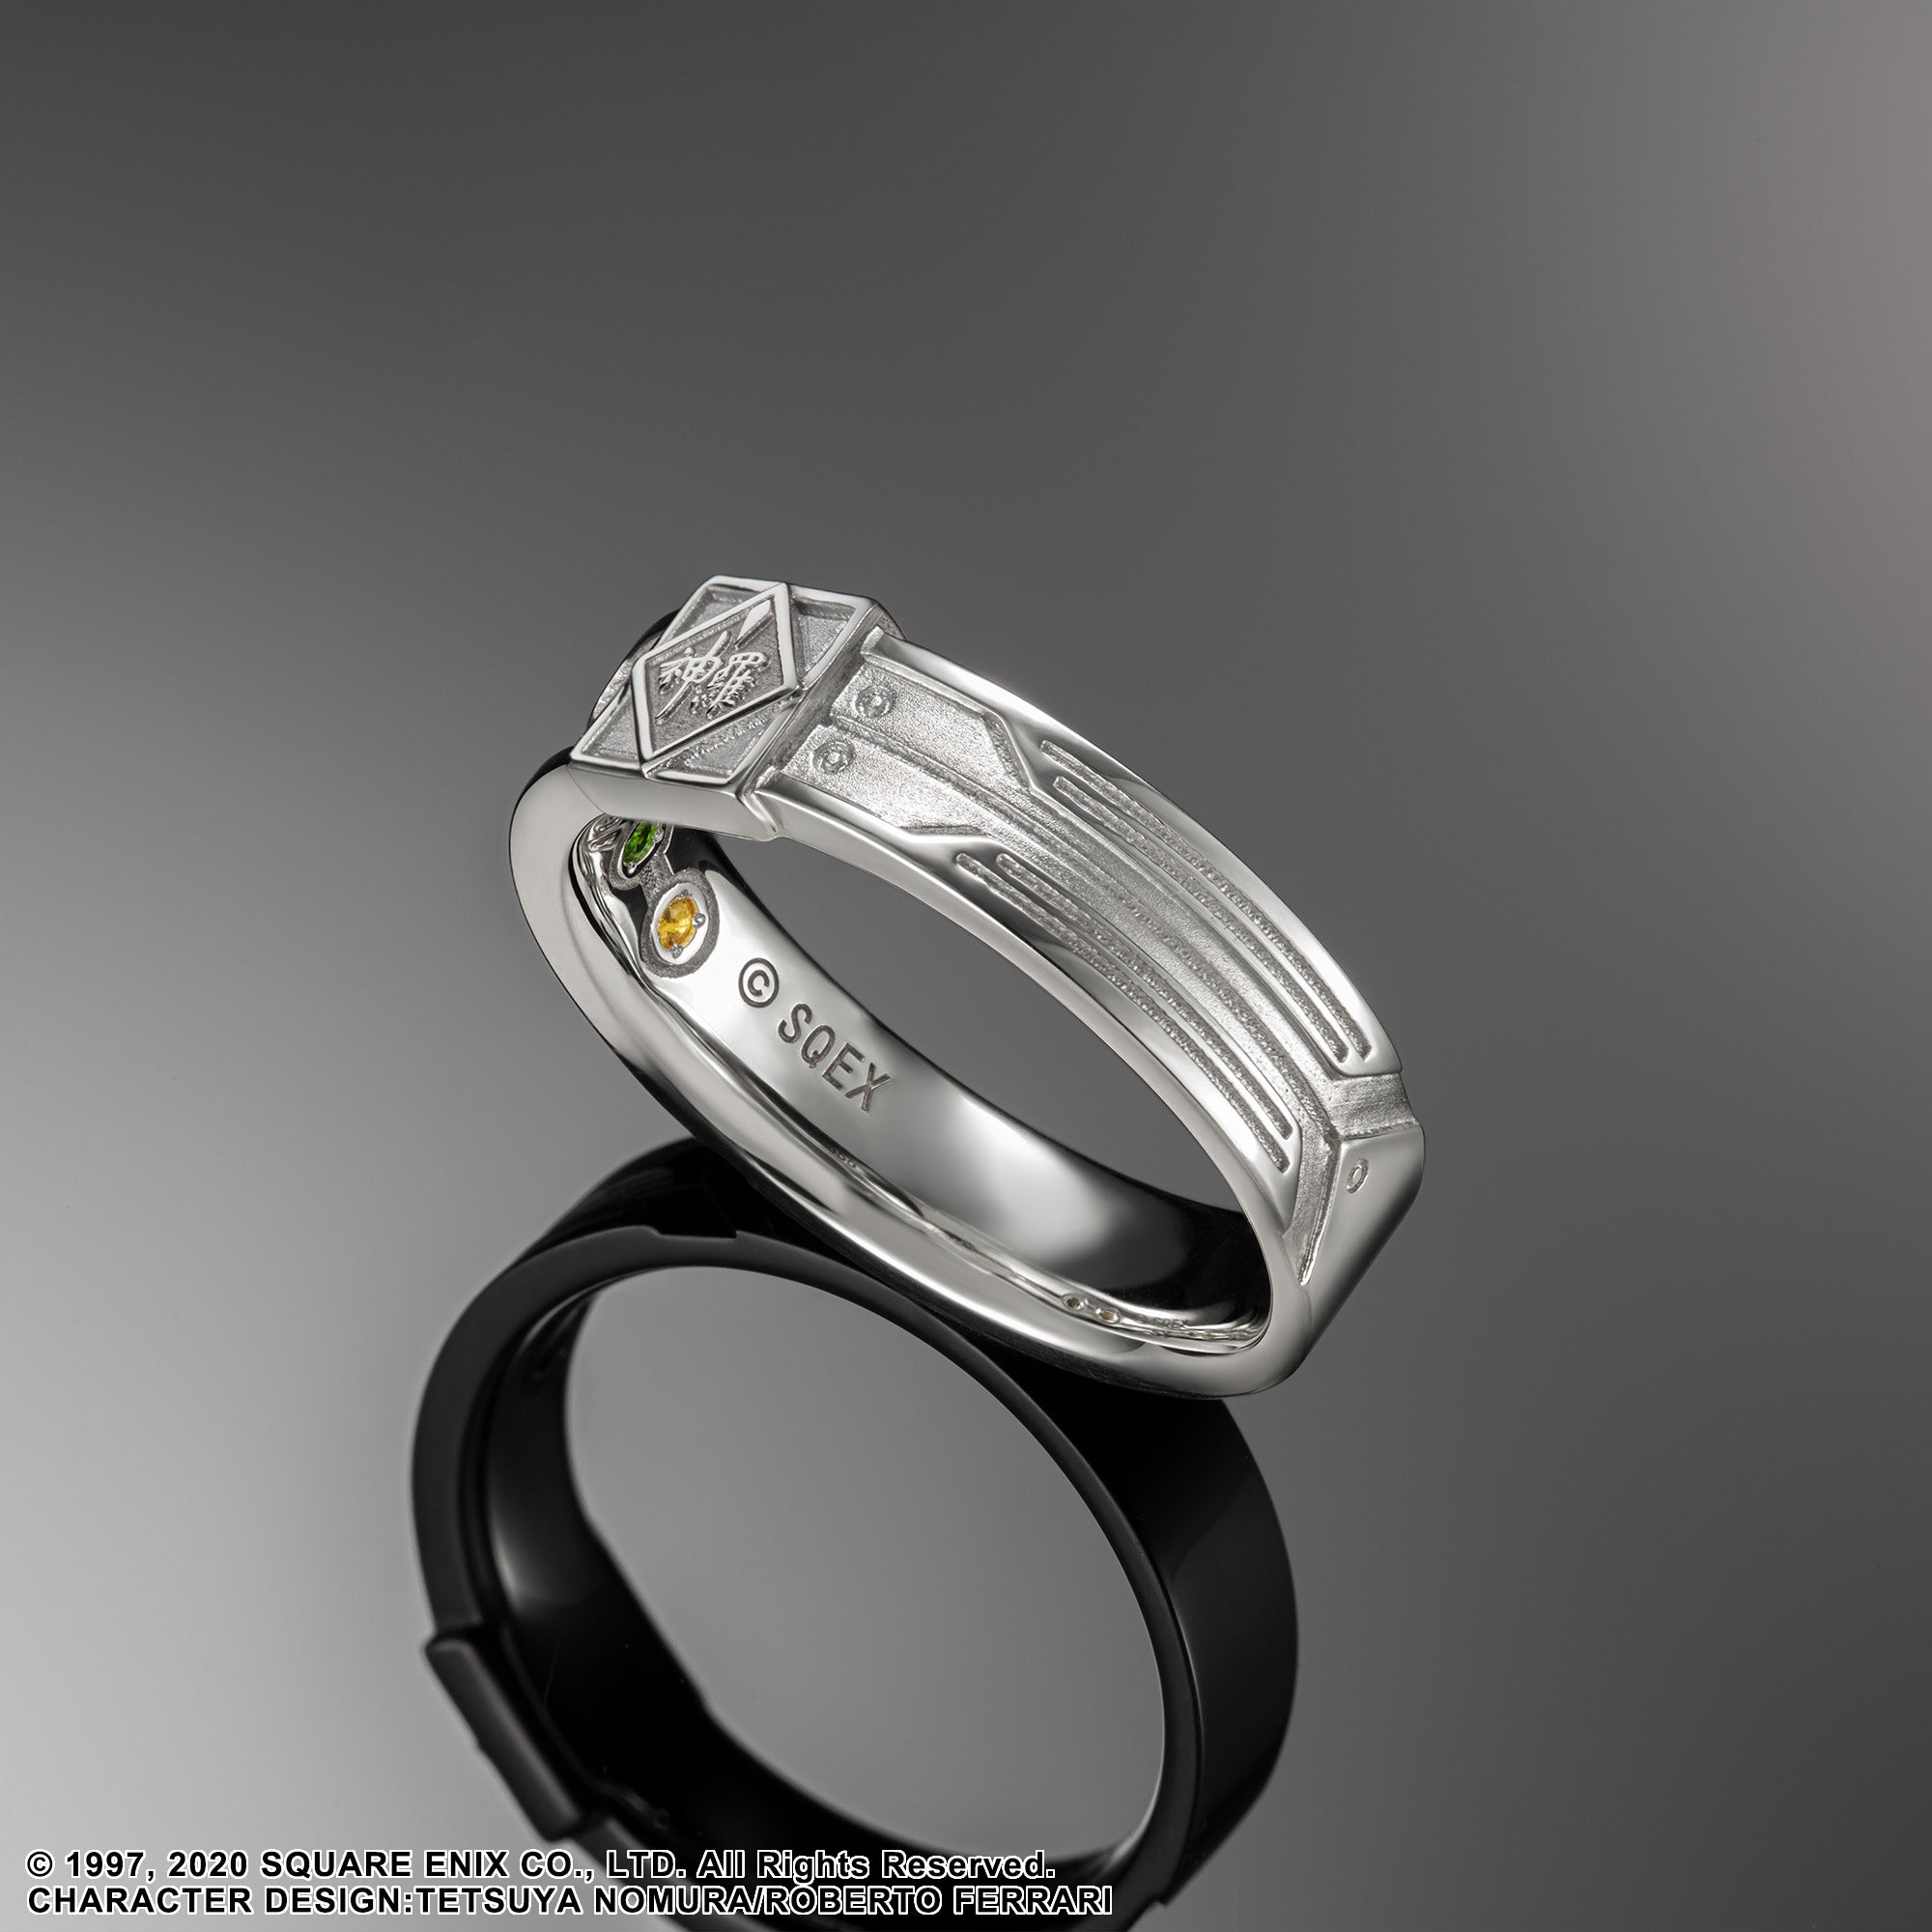 FINAL FANTASY VII Silver Ring SHINRA MATERIA TYPE A (Emerald + Blue Sapphire) Size 19